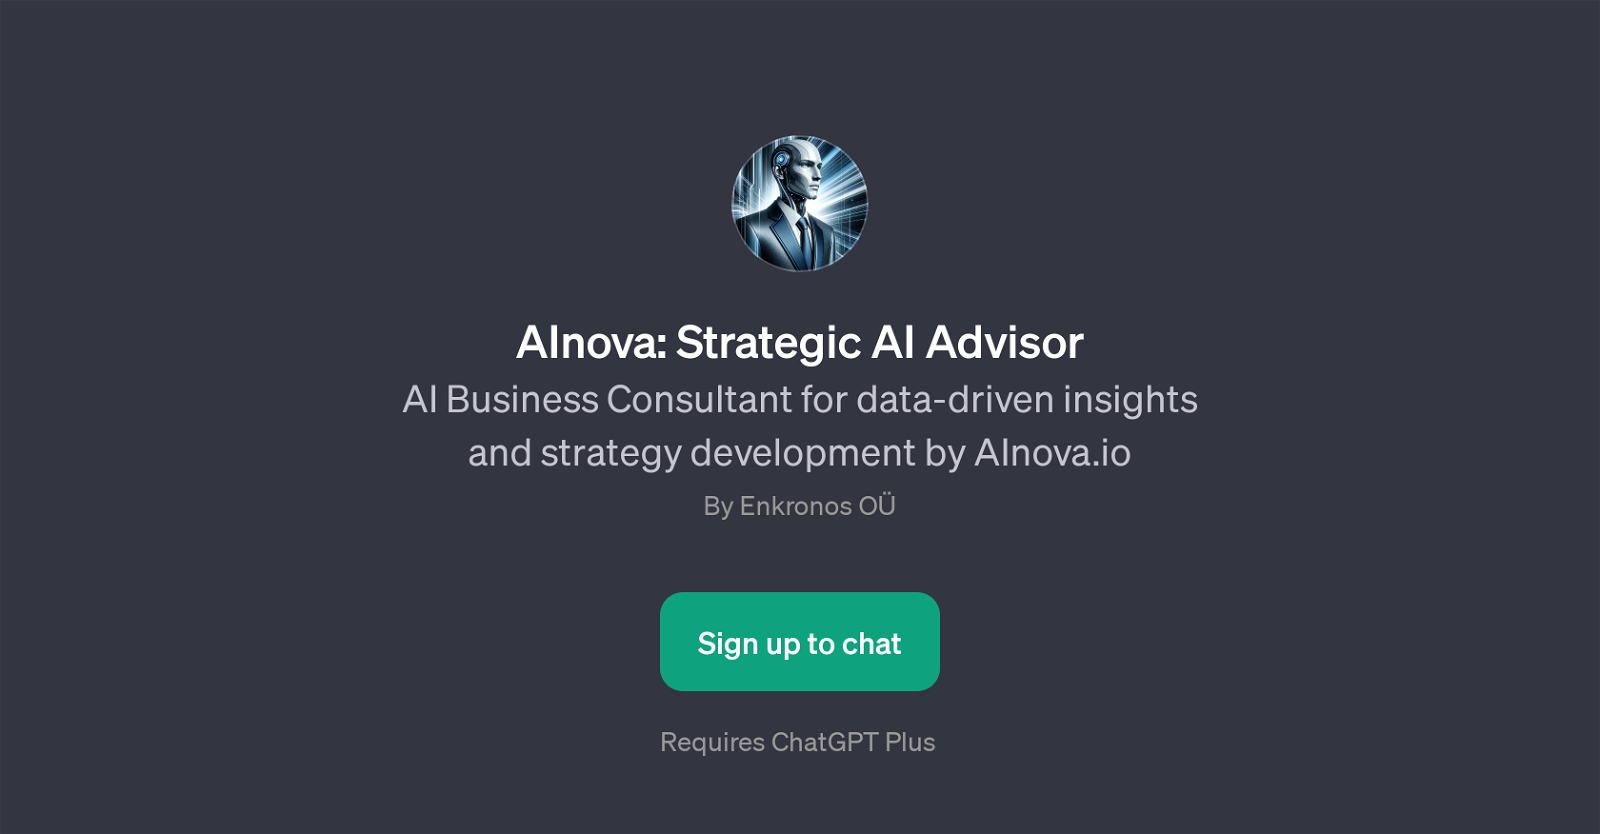 AInova: Strategic AI Advisor website